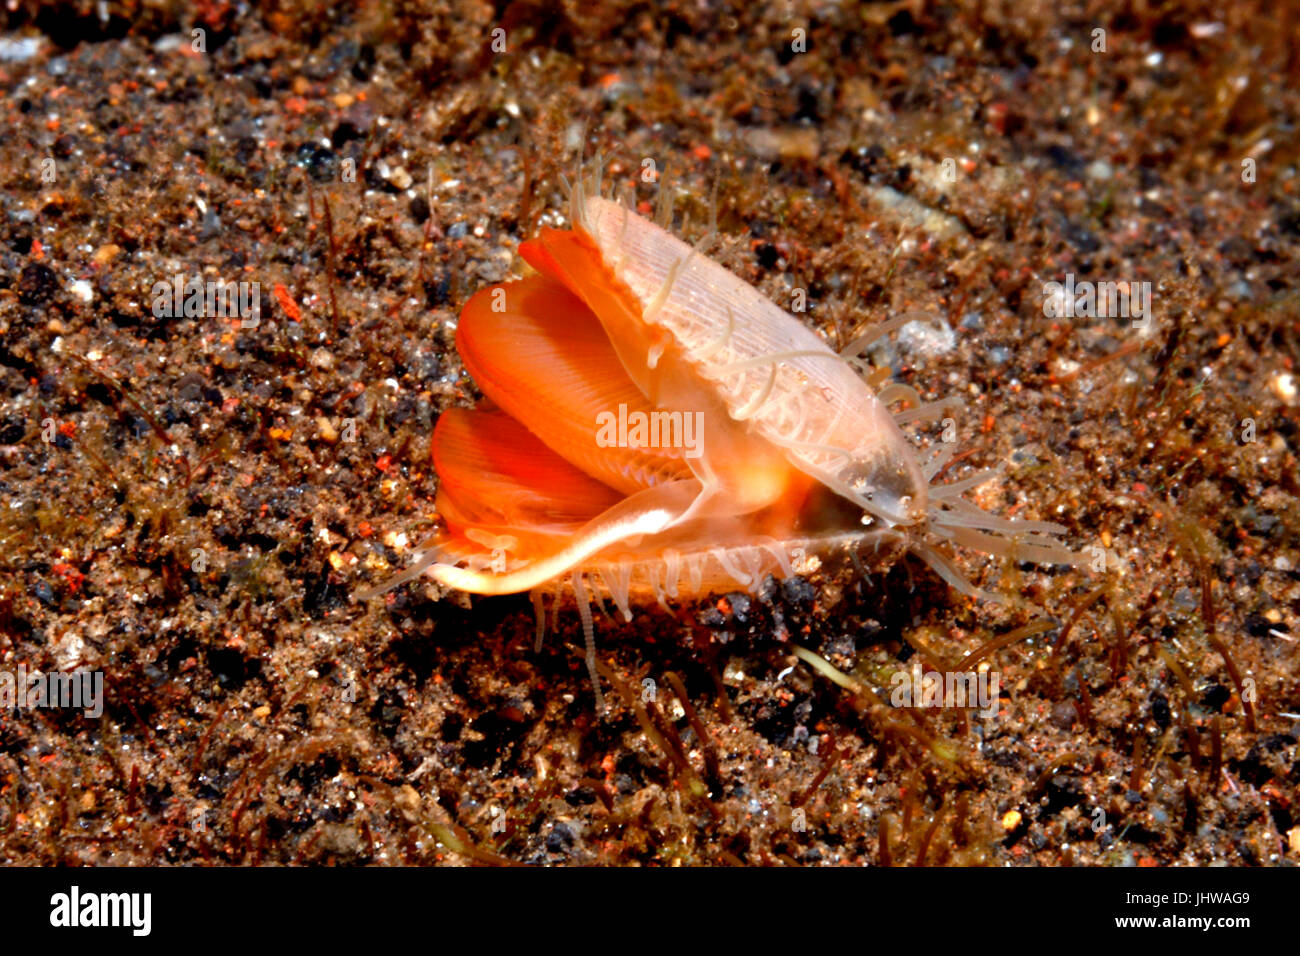 File Shell, Limaria sp. Possibly Fragile File Shell, Limaria fragilis. Tulamben, Bali, Indonesia. Bali Sea, Indian Ocean Stock Photo